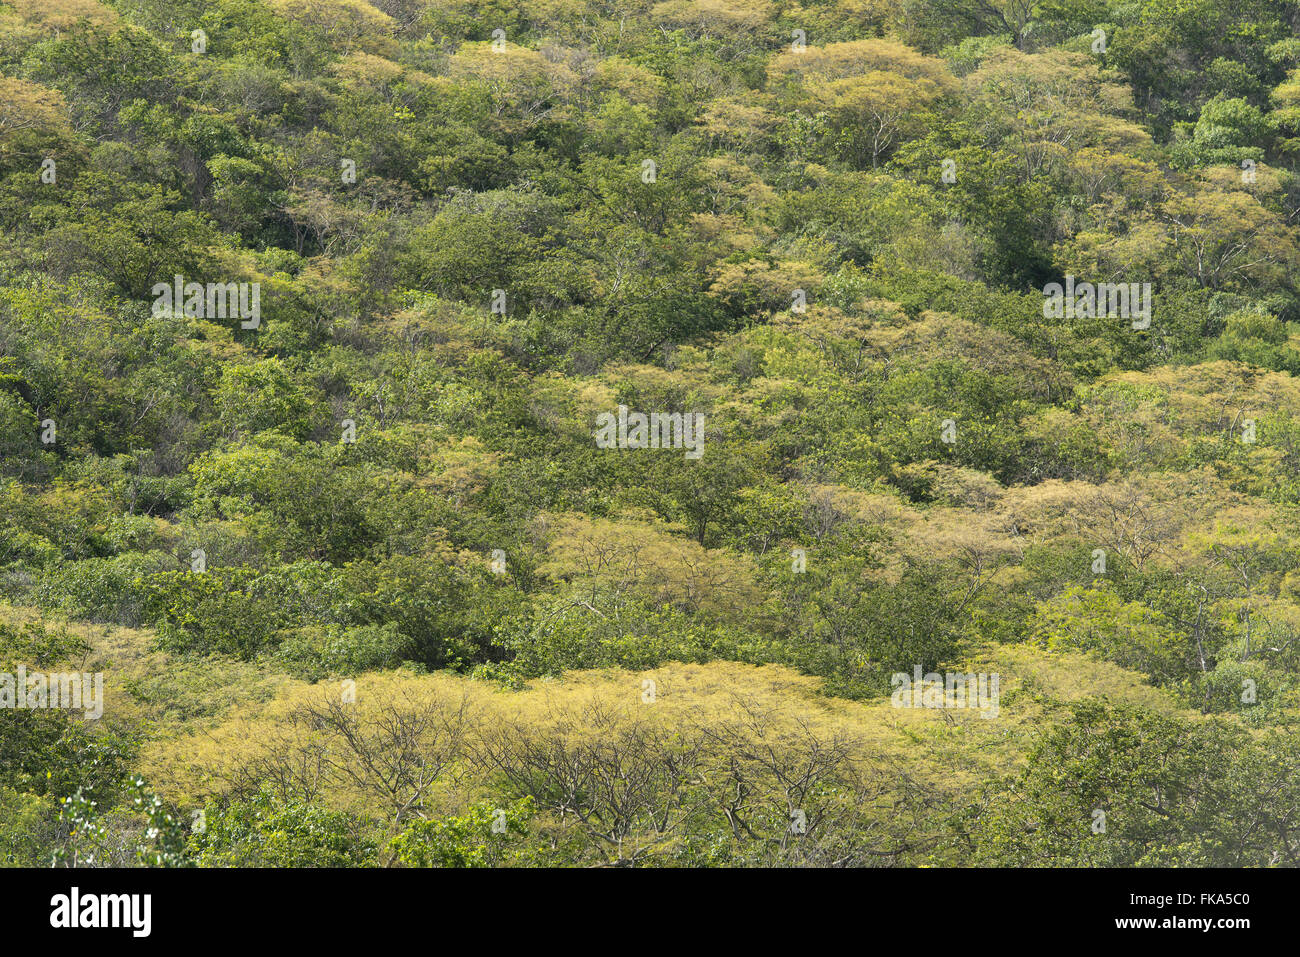 Forest of savanna during the rainy season Stock Photo